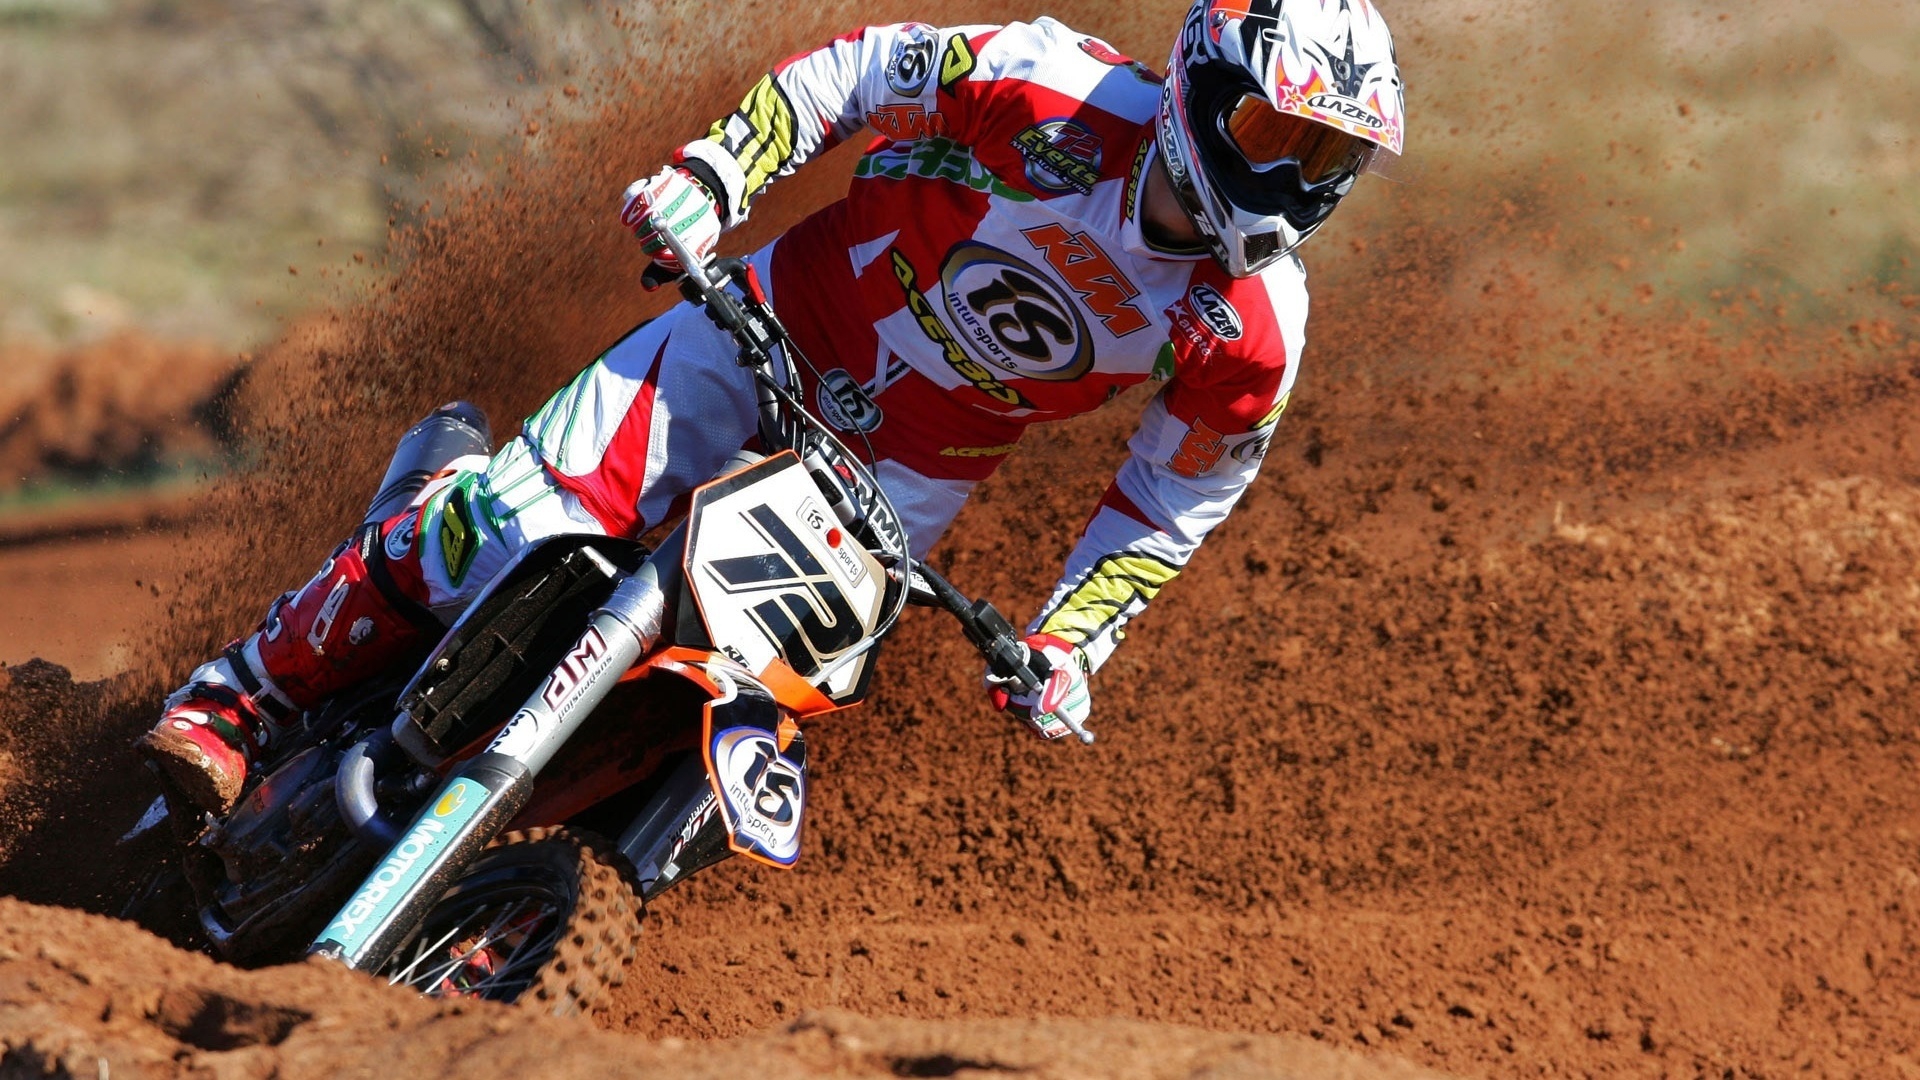 Free Download Motocross Ktm Wallpapers | PixelsTalk.Net, motocross wallpaper hd